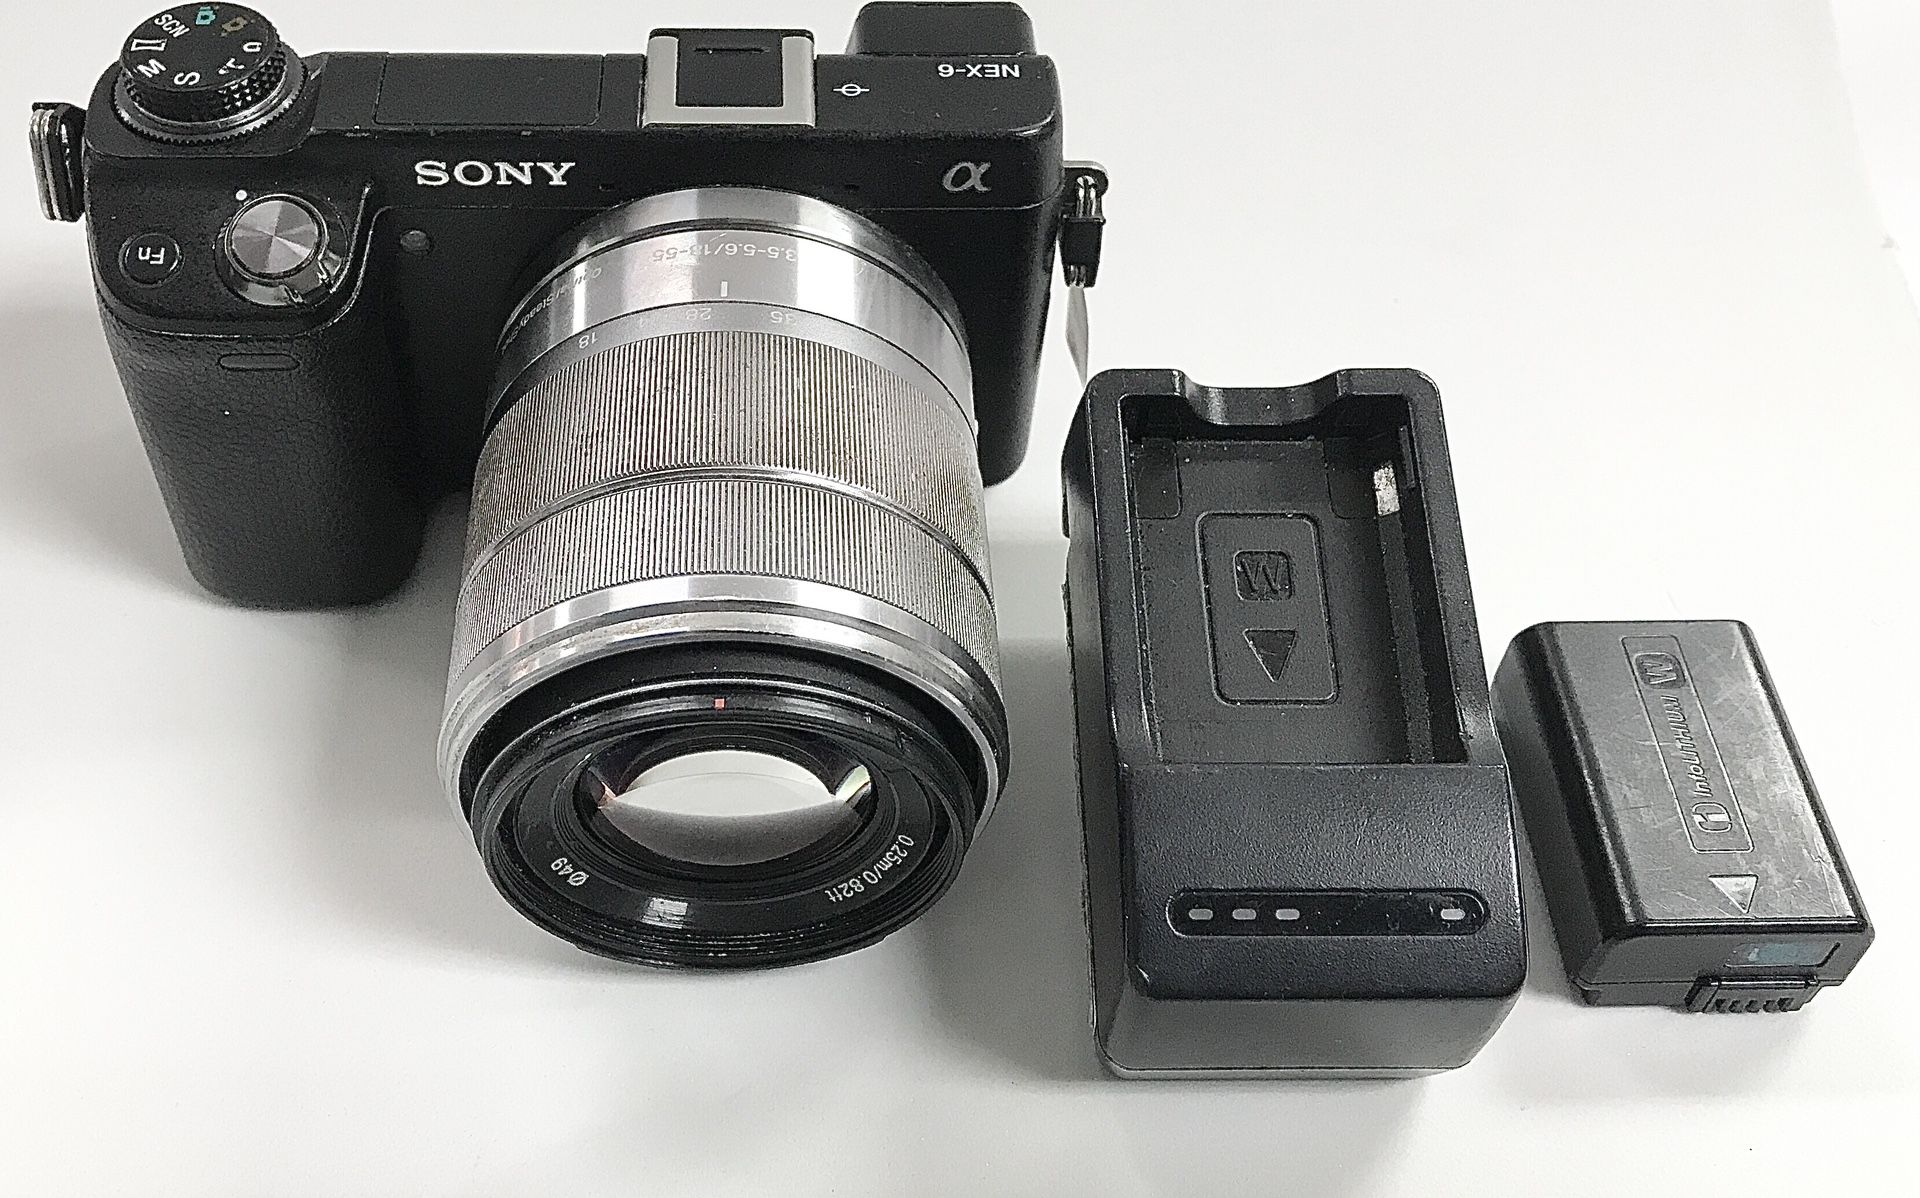 Sony NEX-6 Mirrorless Digital Camera with 18-55mm PZ Power Zoom Lens